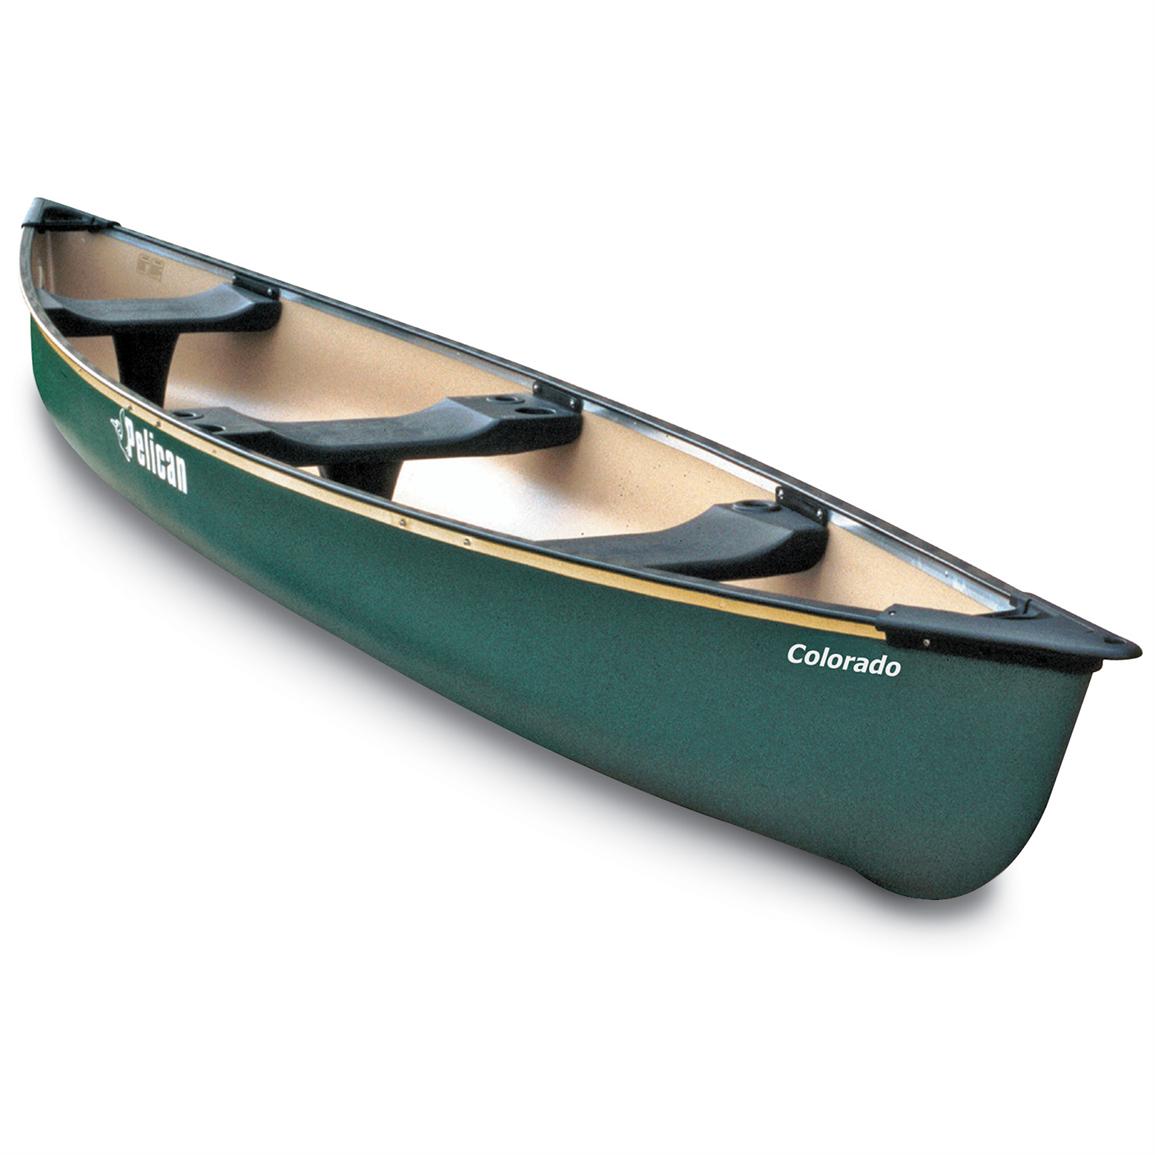 Pelican® Colorado Canoe - 88263, Canoes & Kayaks at Sportsman's Guide